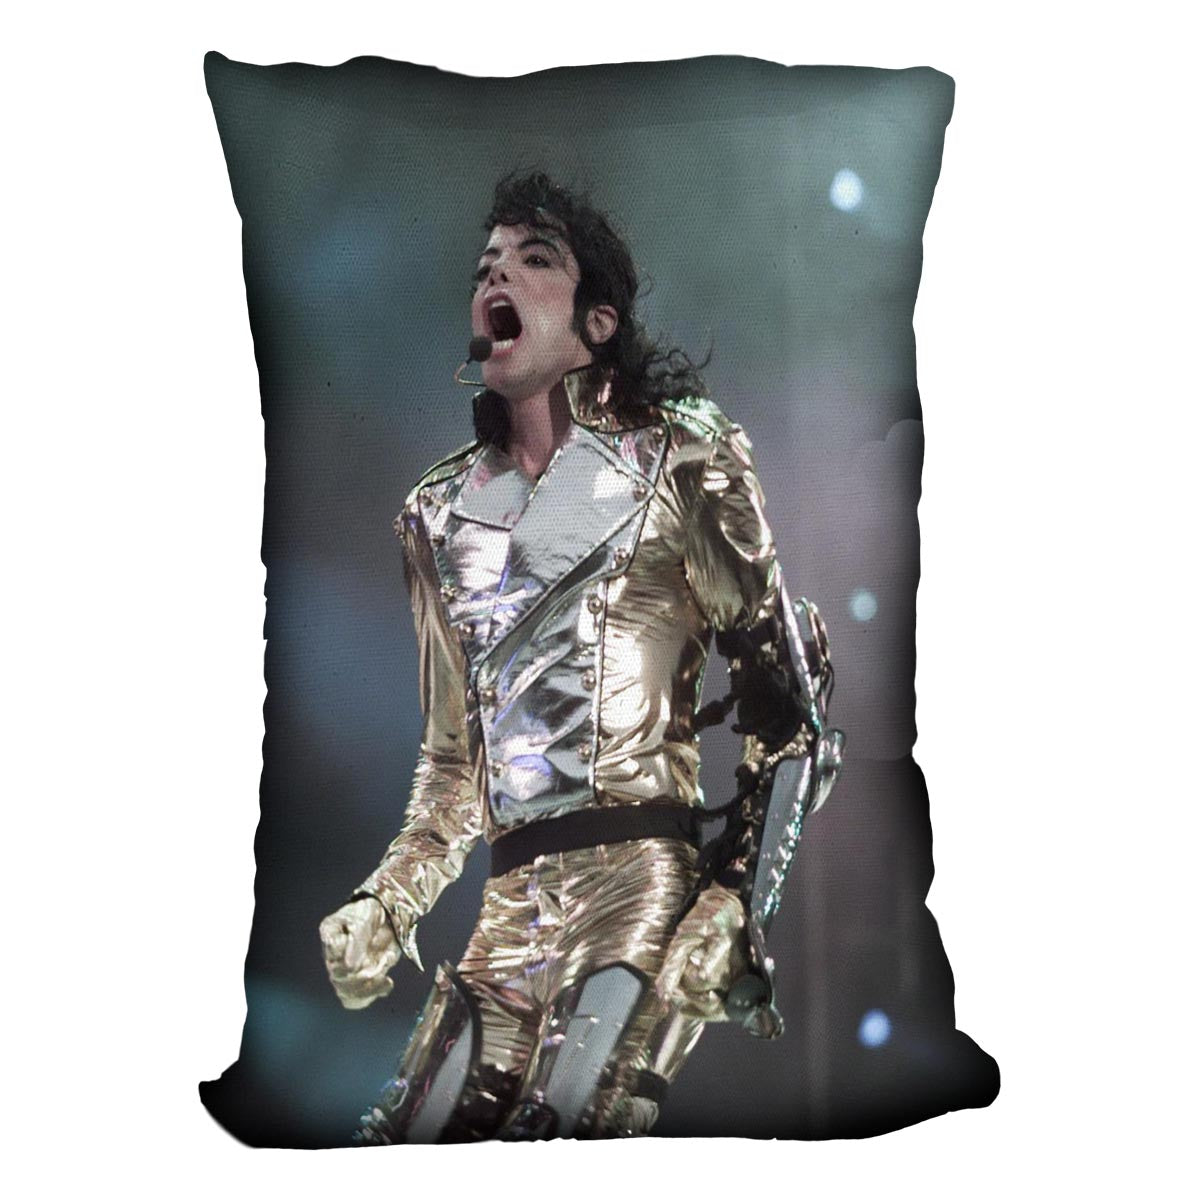 Michael Jackson performs Cushion